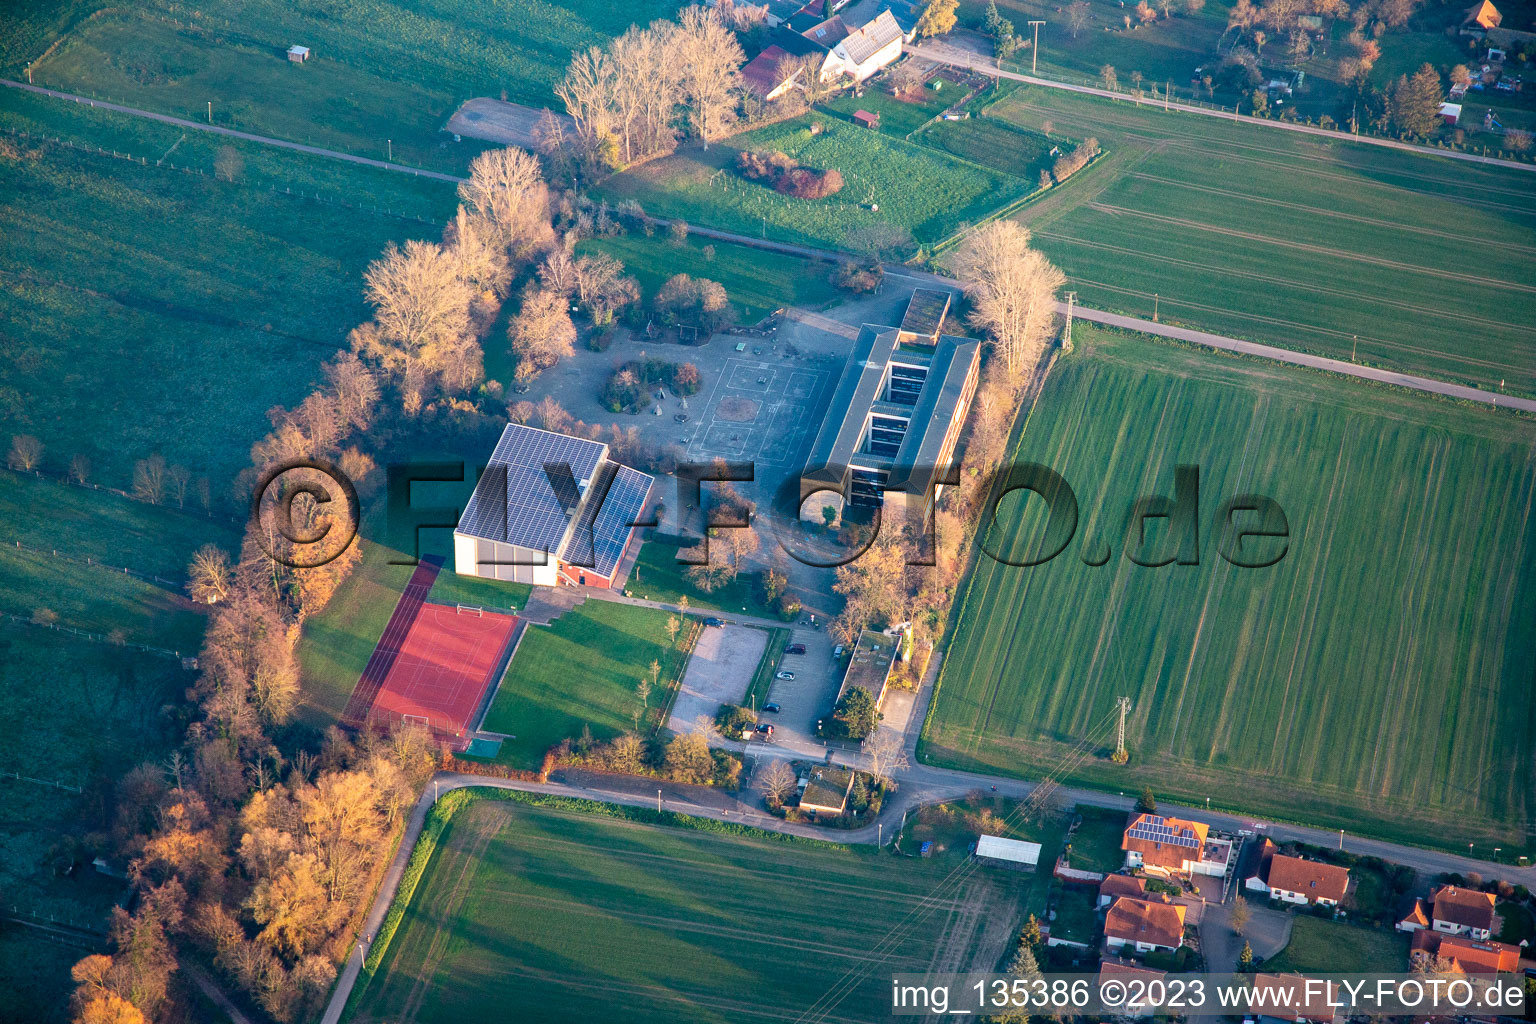 Klingbach School in the district Ingenheim in Billigheim-Ingenheim in the state Rhineland-Palatinate, Germany